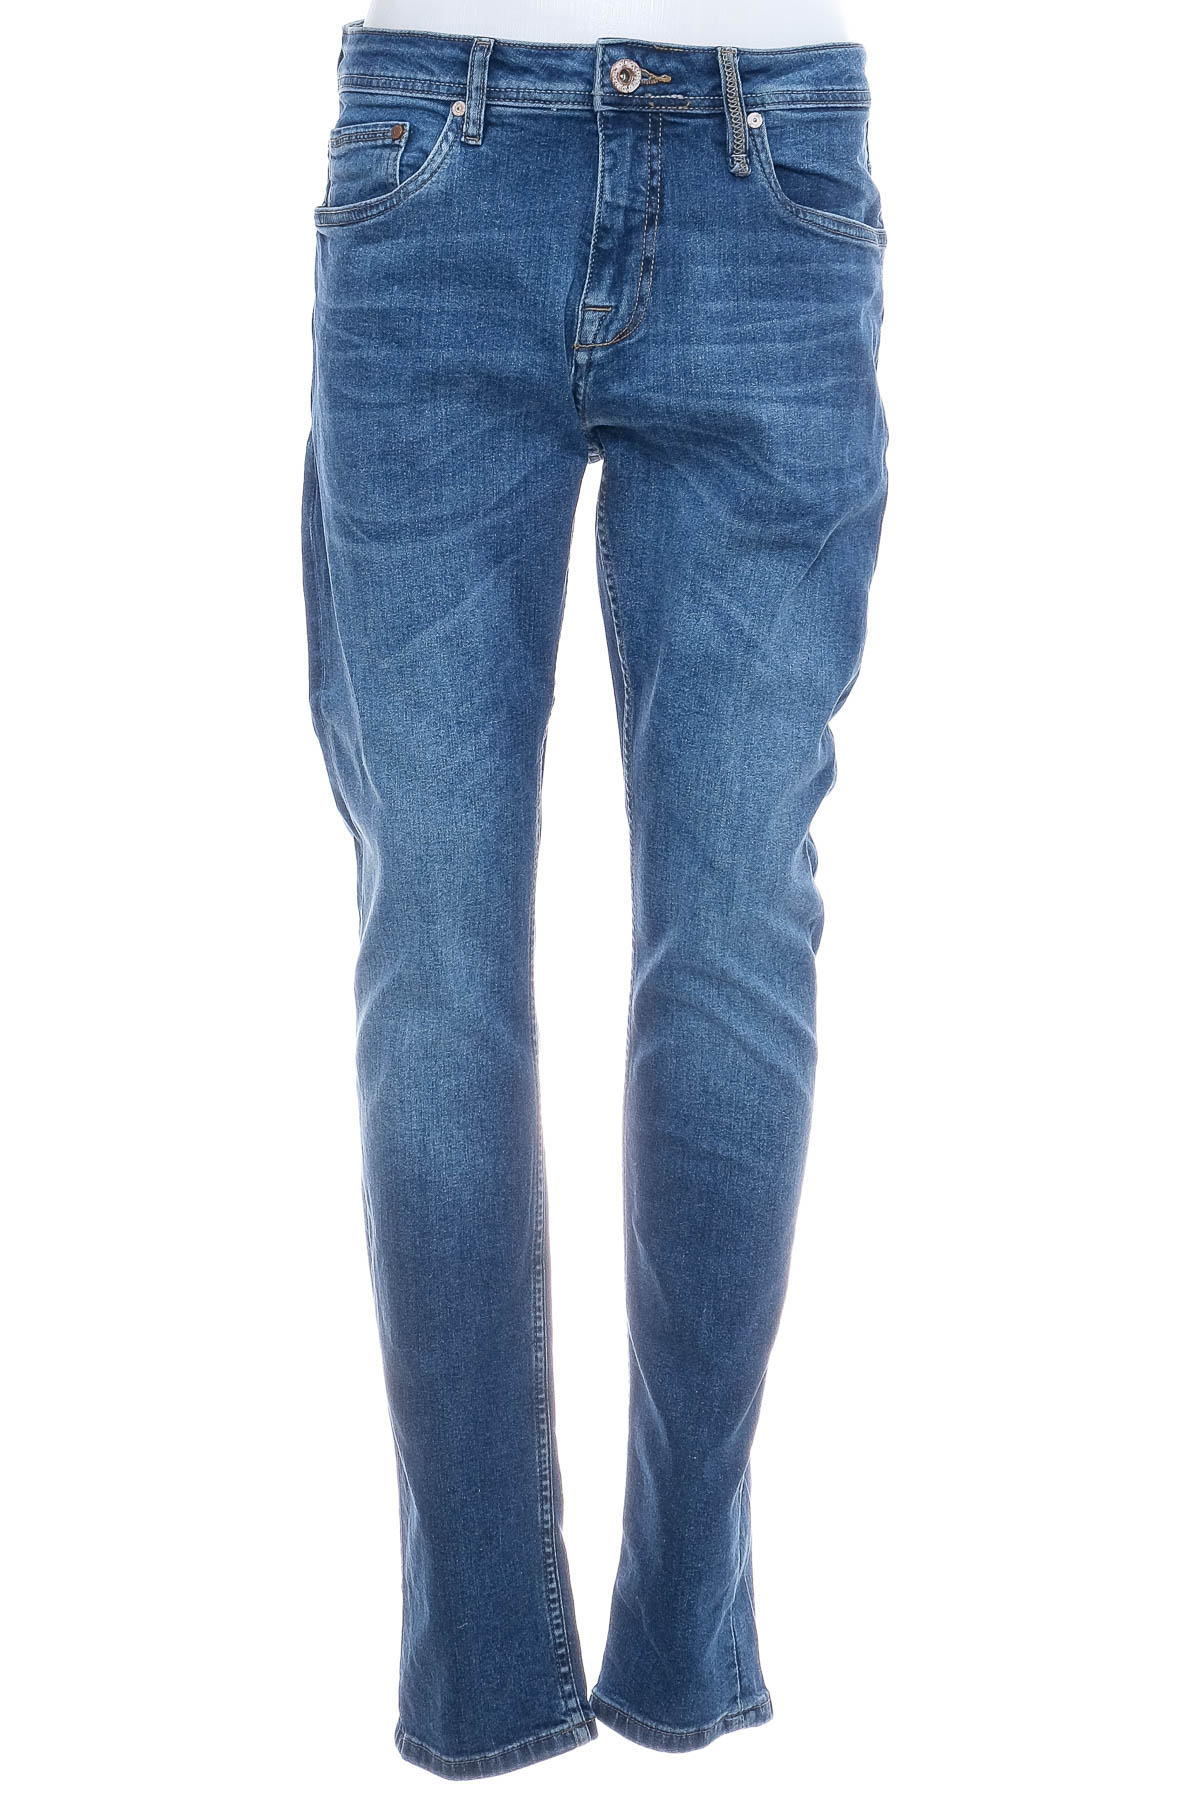 Men's jeans - SUBLEVEL - 0